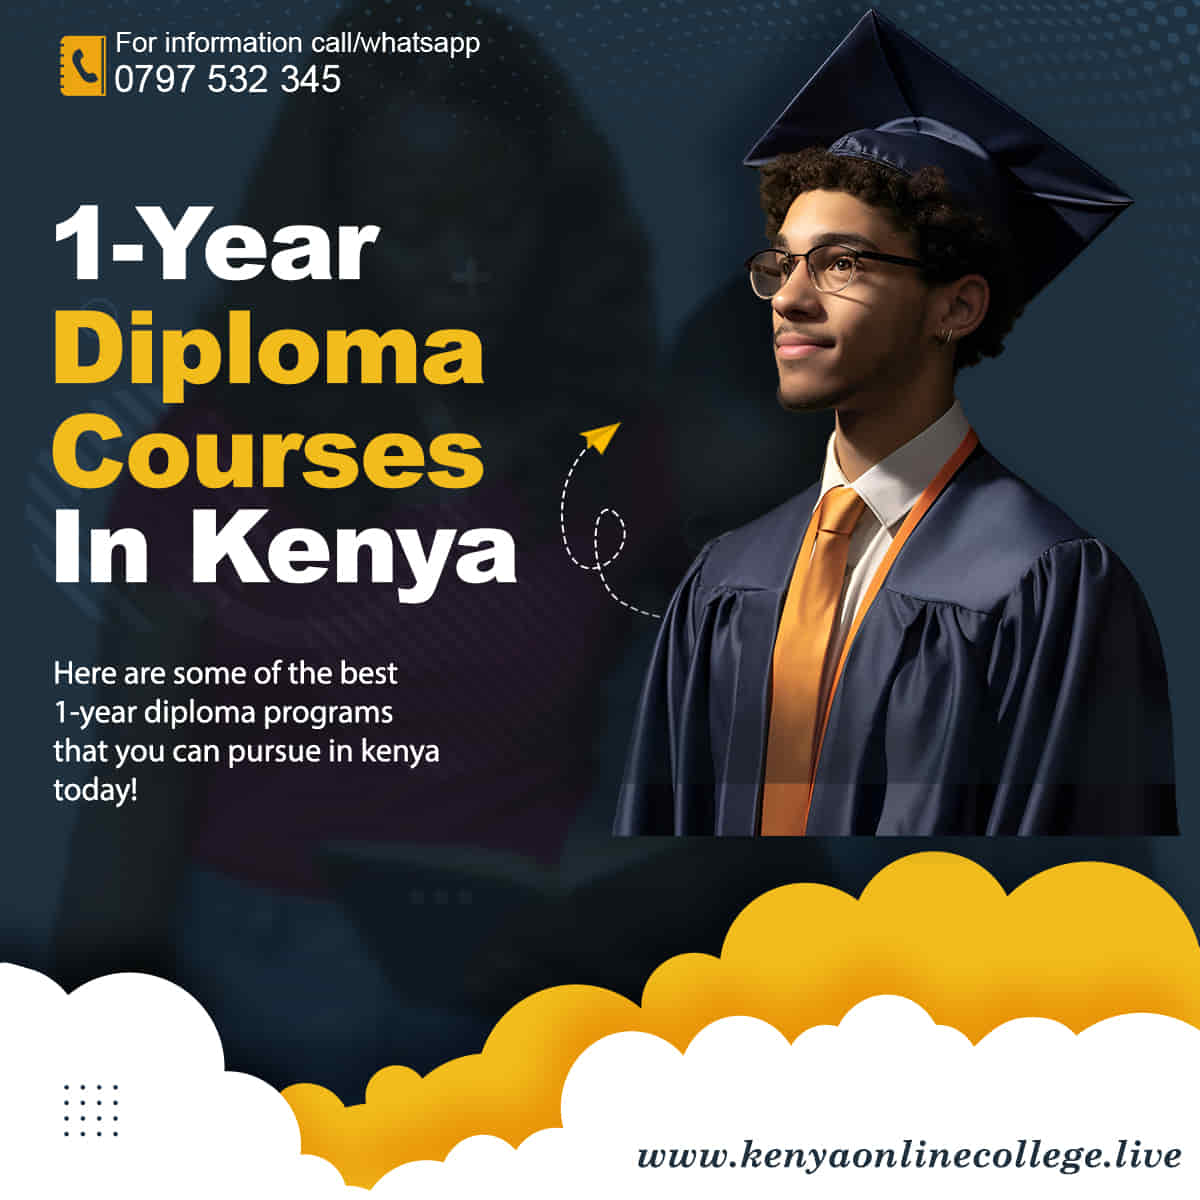 1-year diploma courses in Kenya